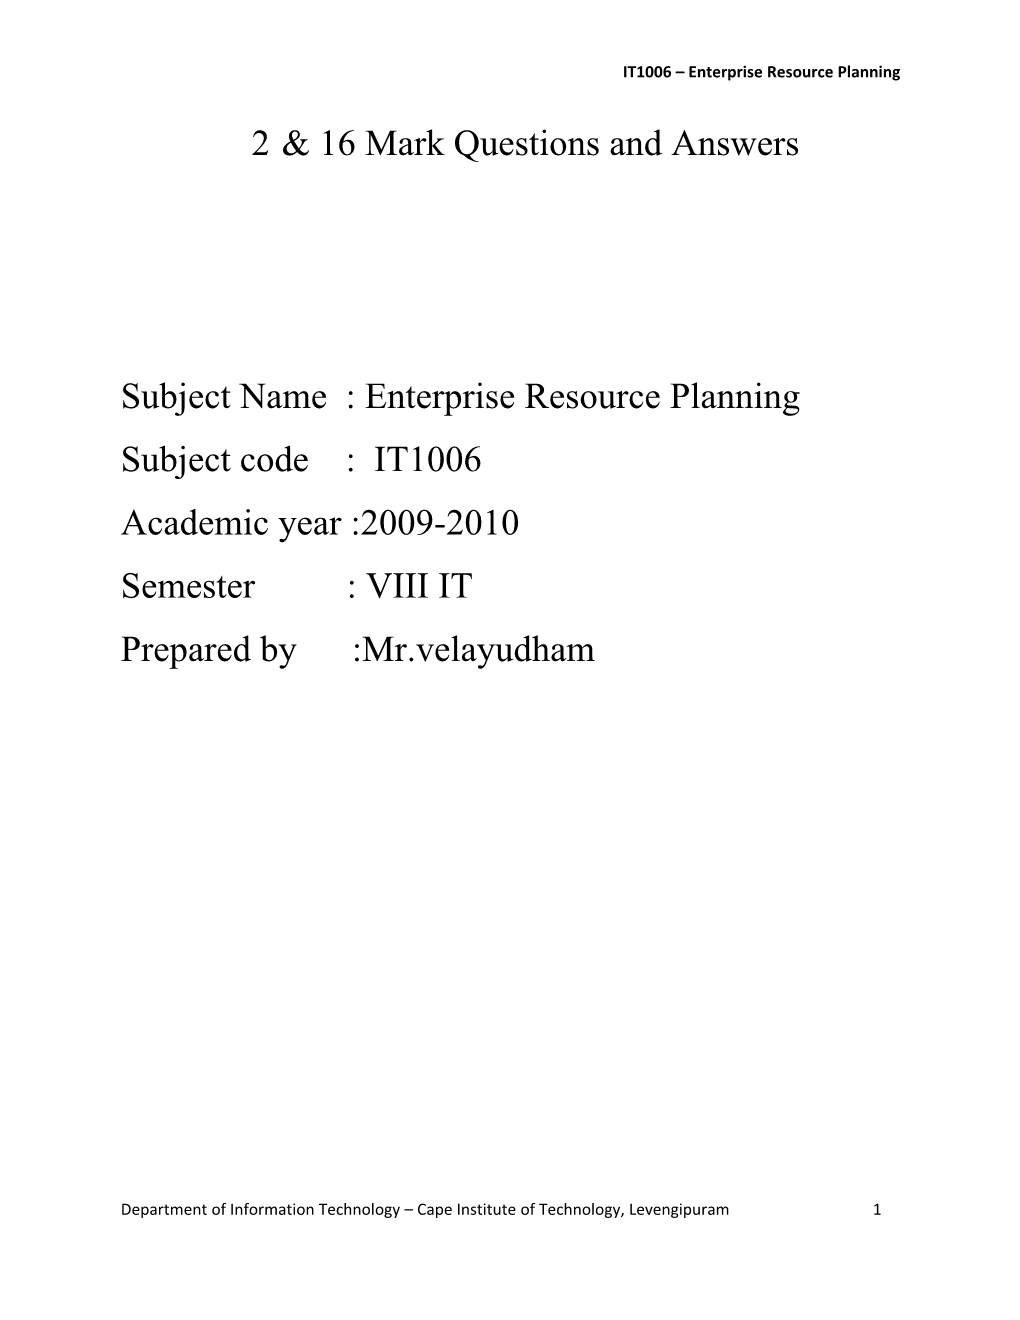 IT1006 Enterprise Resource Planning